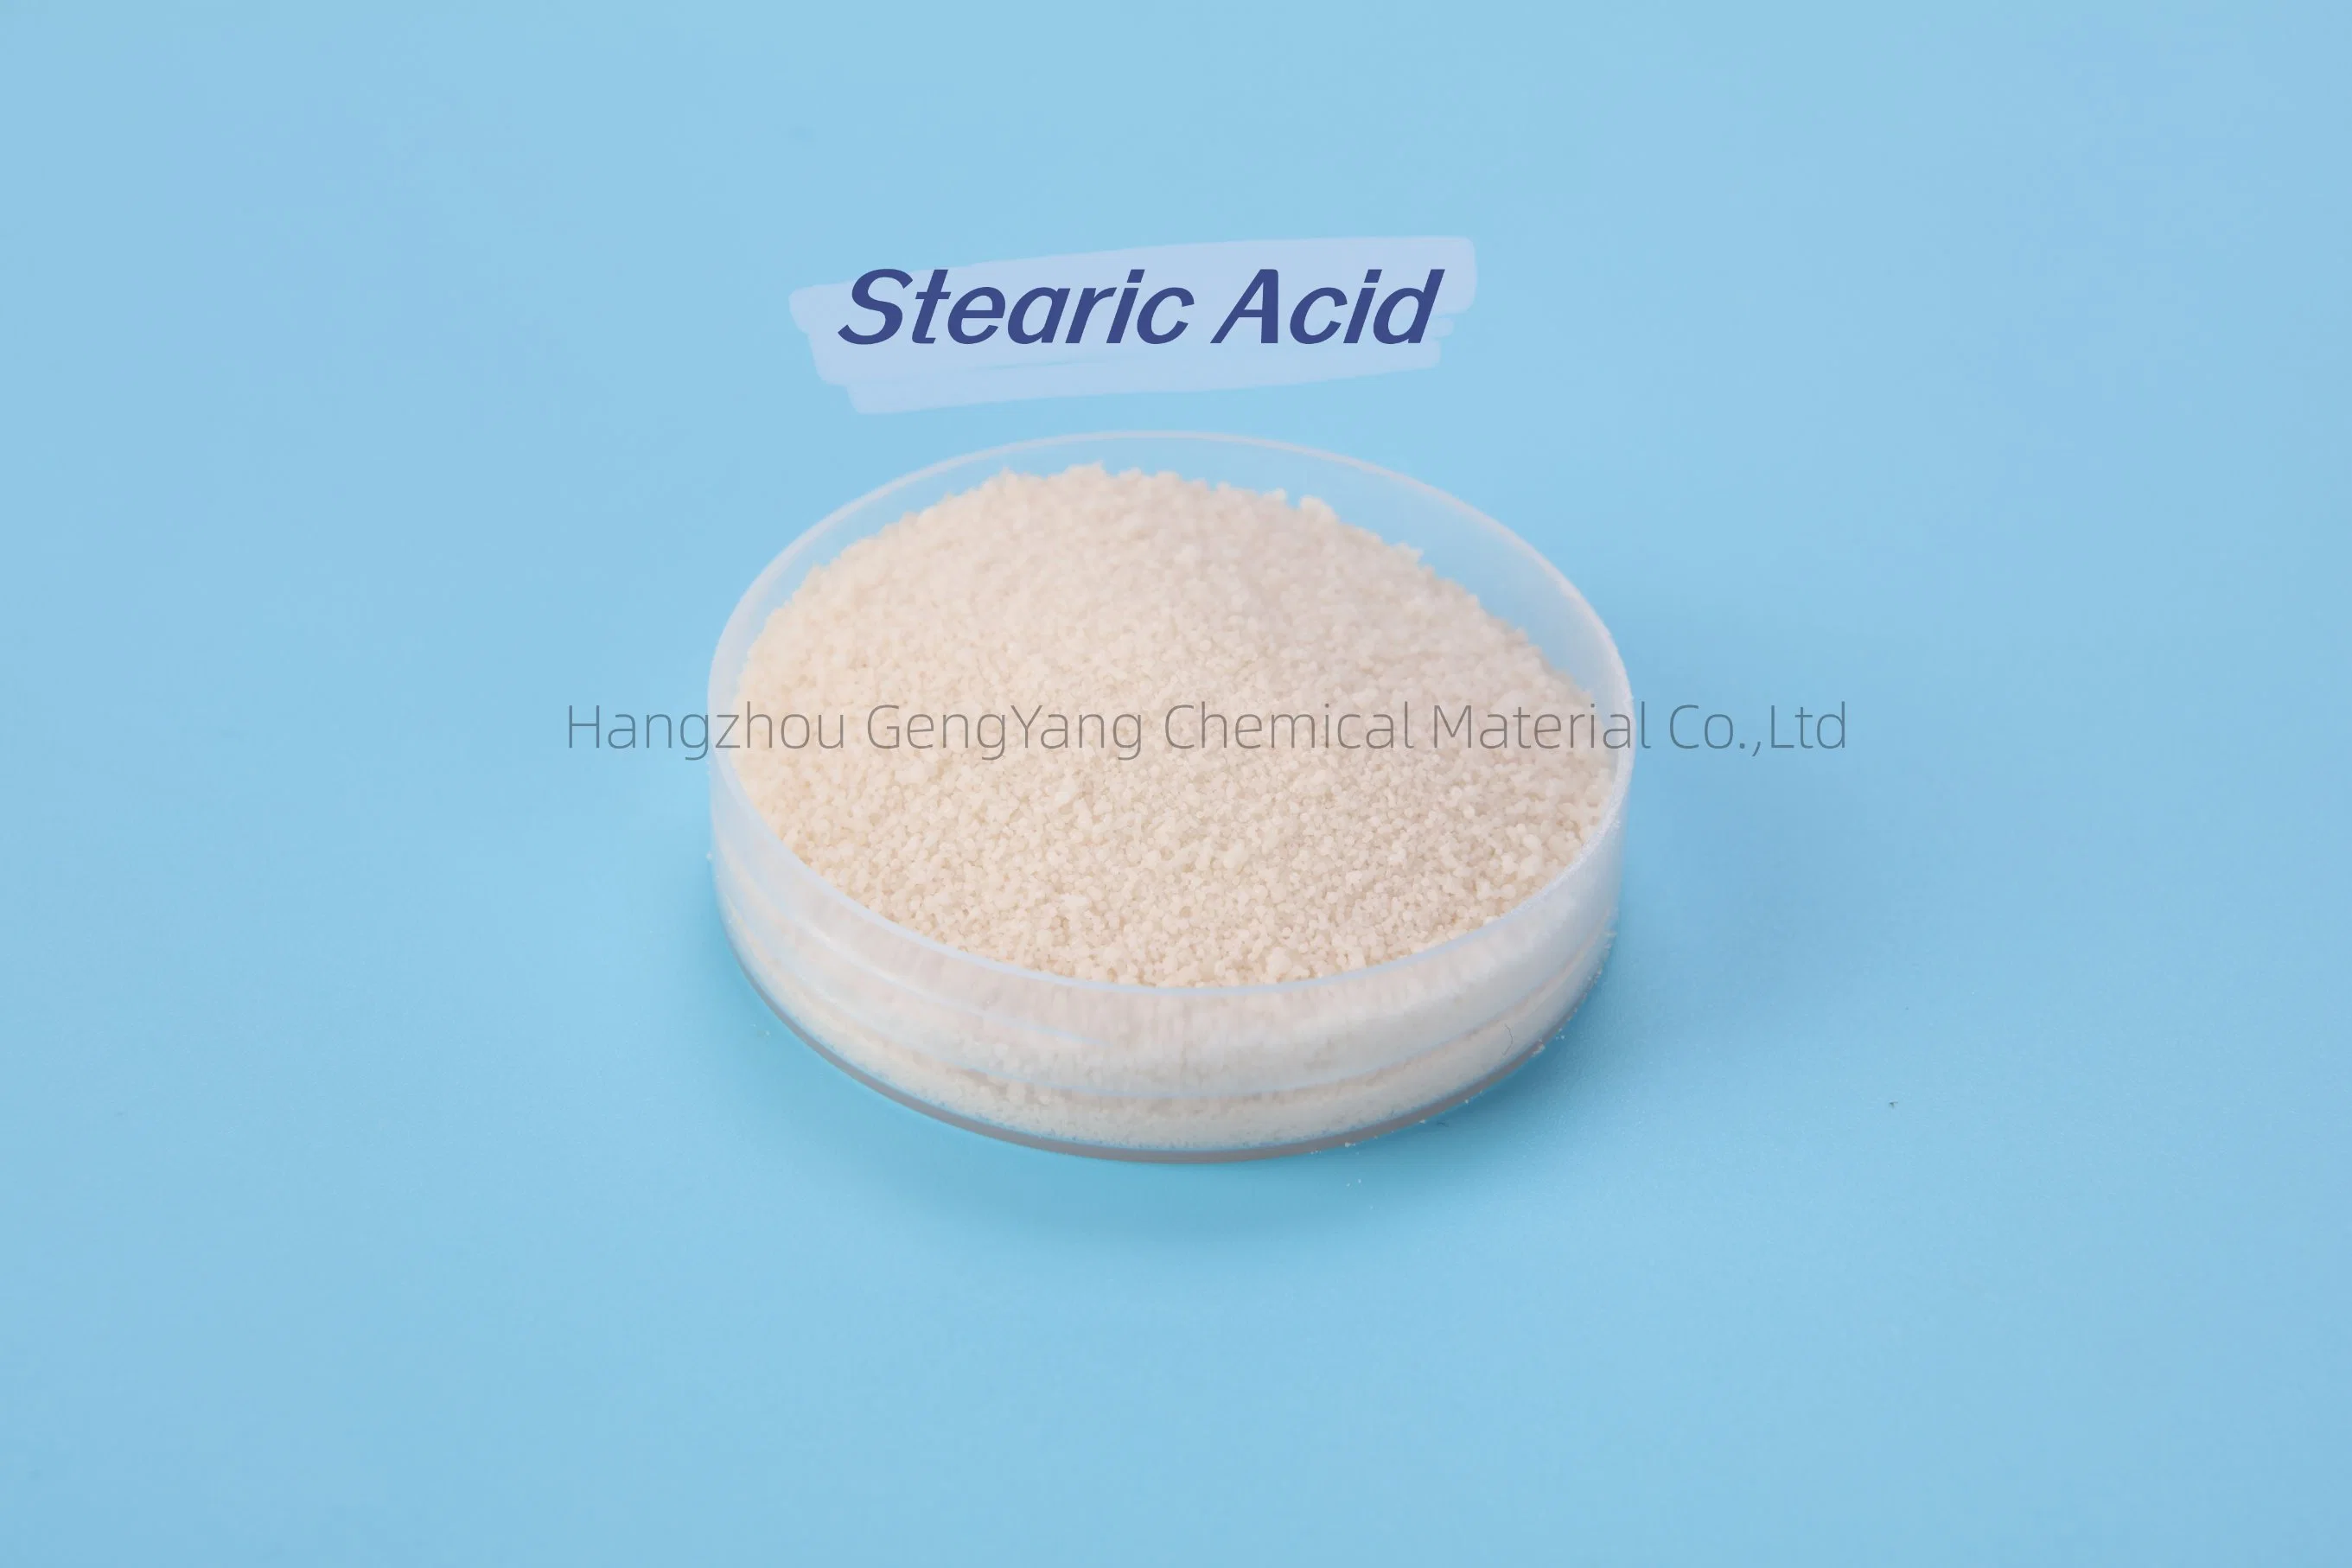 Higq Quality Food Emulsifiers Medical Ingredient Stearic Acid